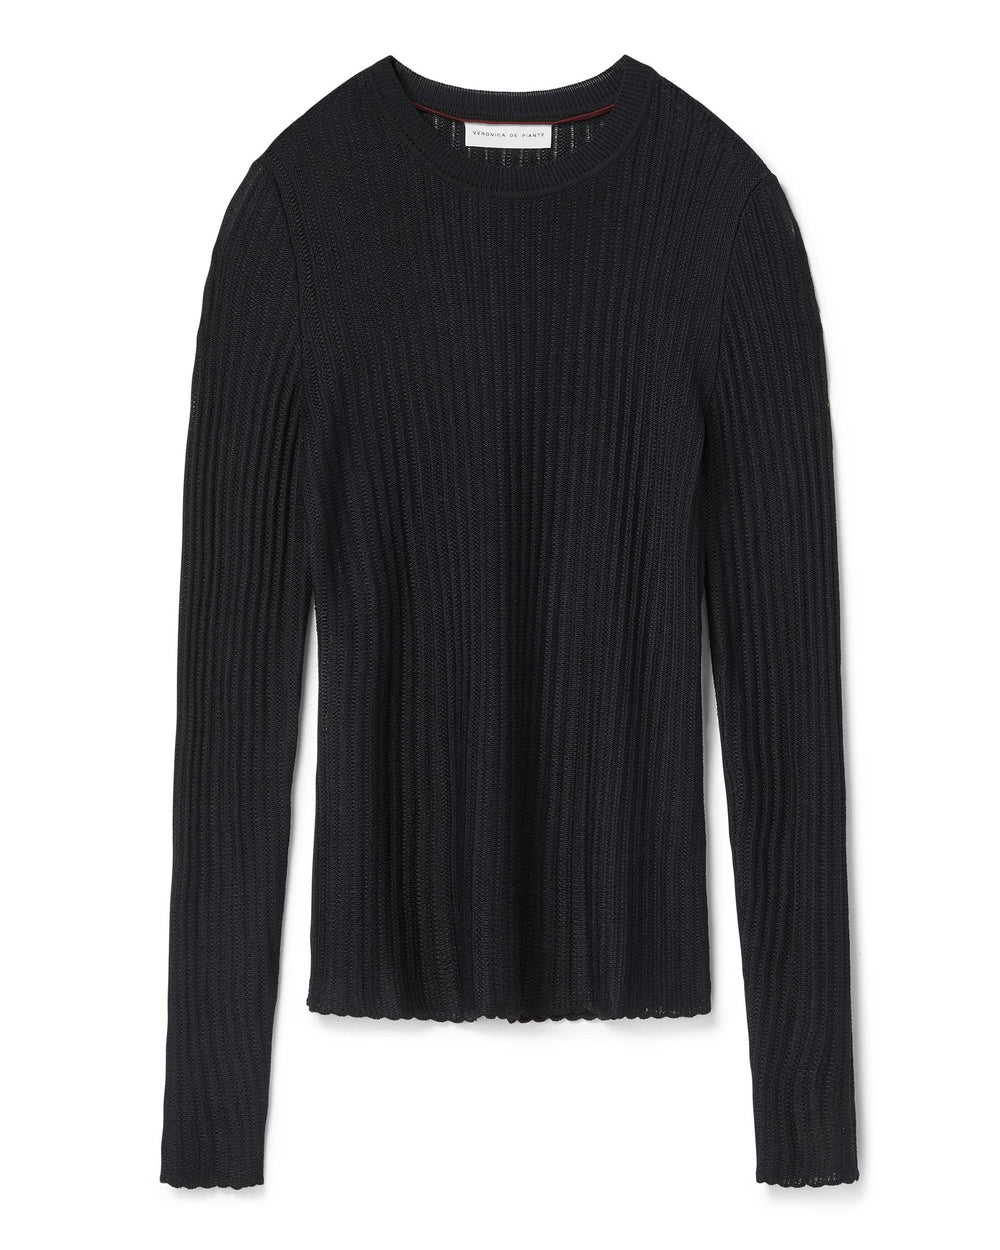 Caroline Sweater in Viscose and Merino Wool, Black